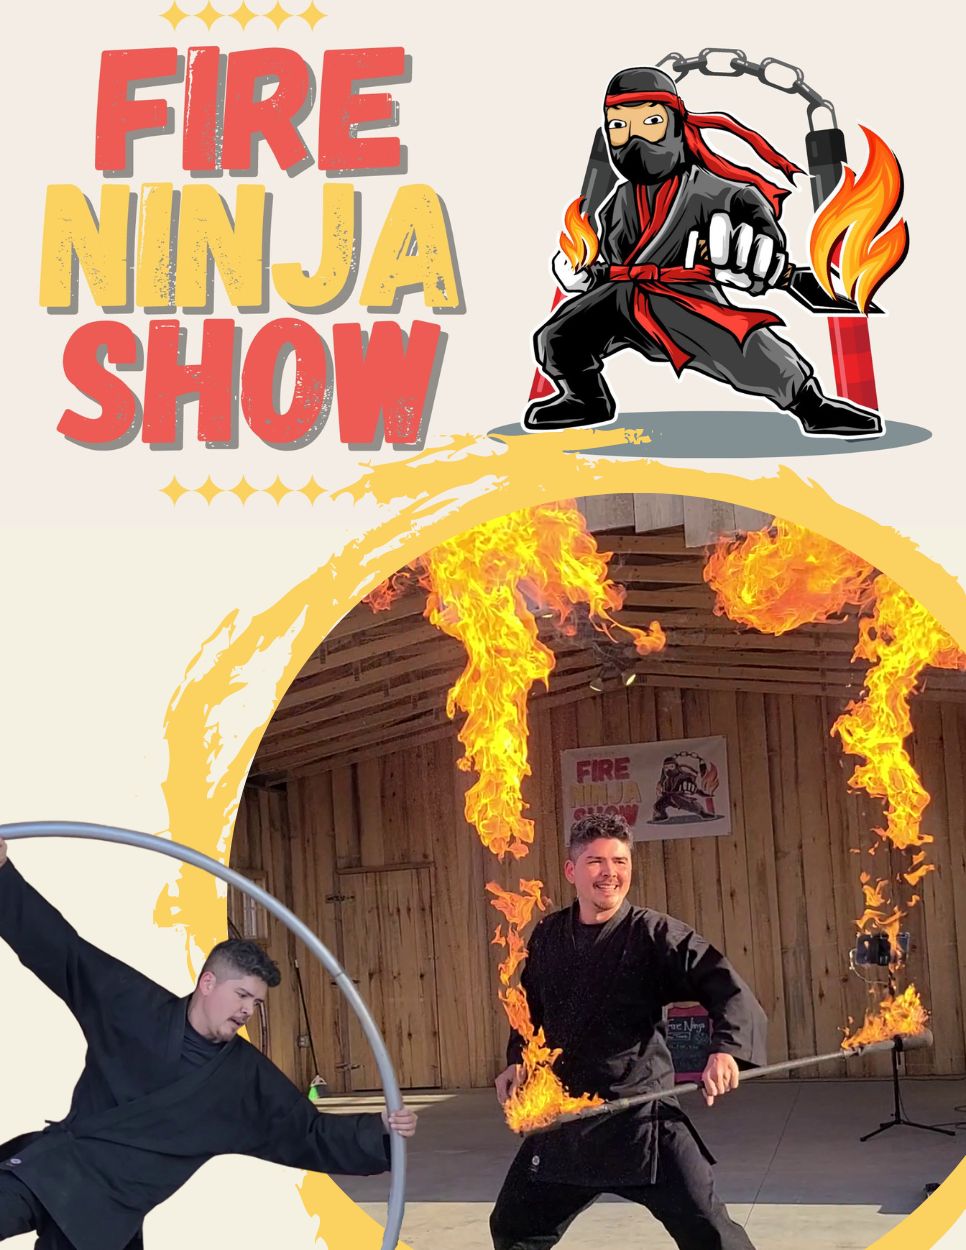 Ken the Fire Ninja